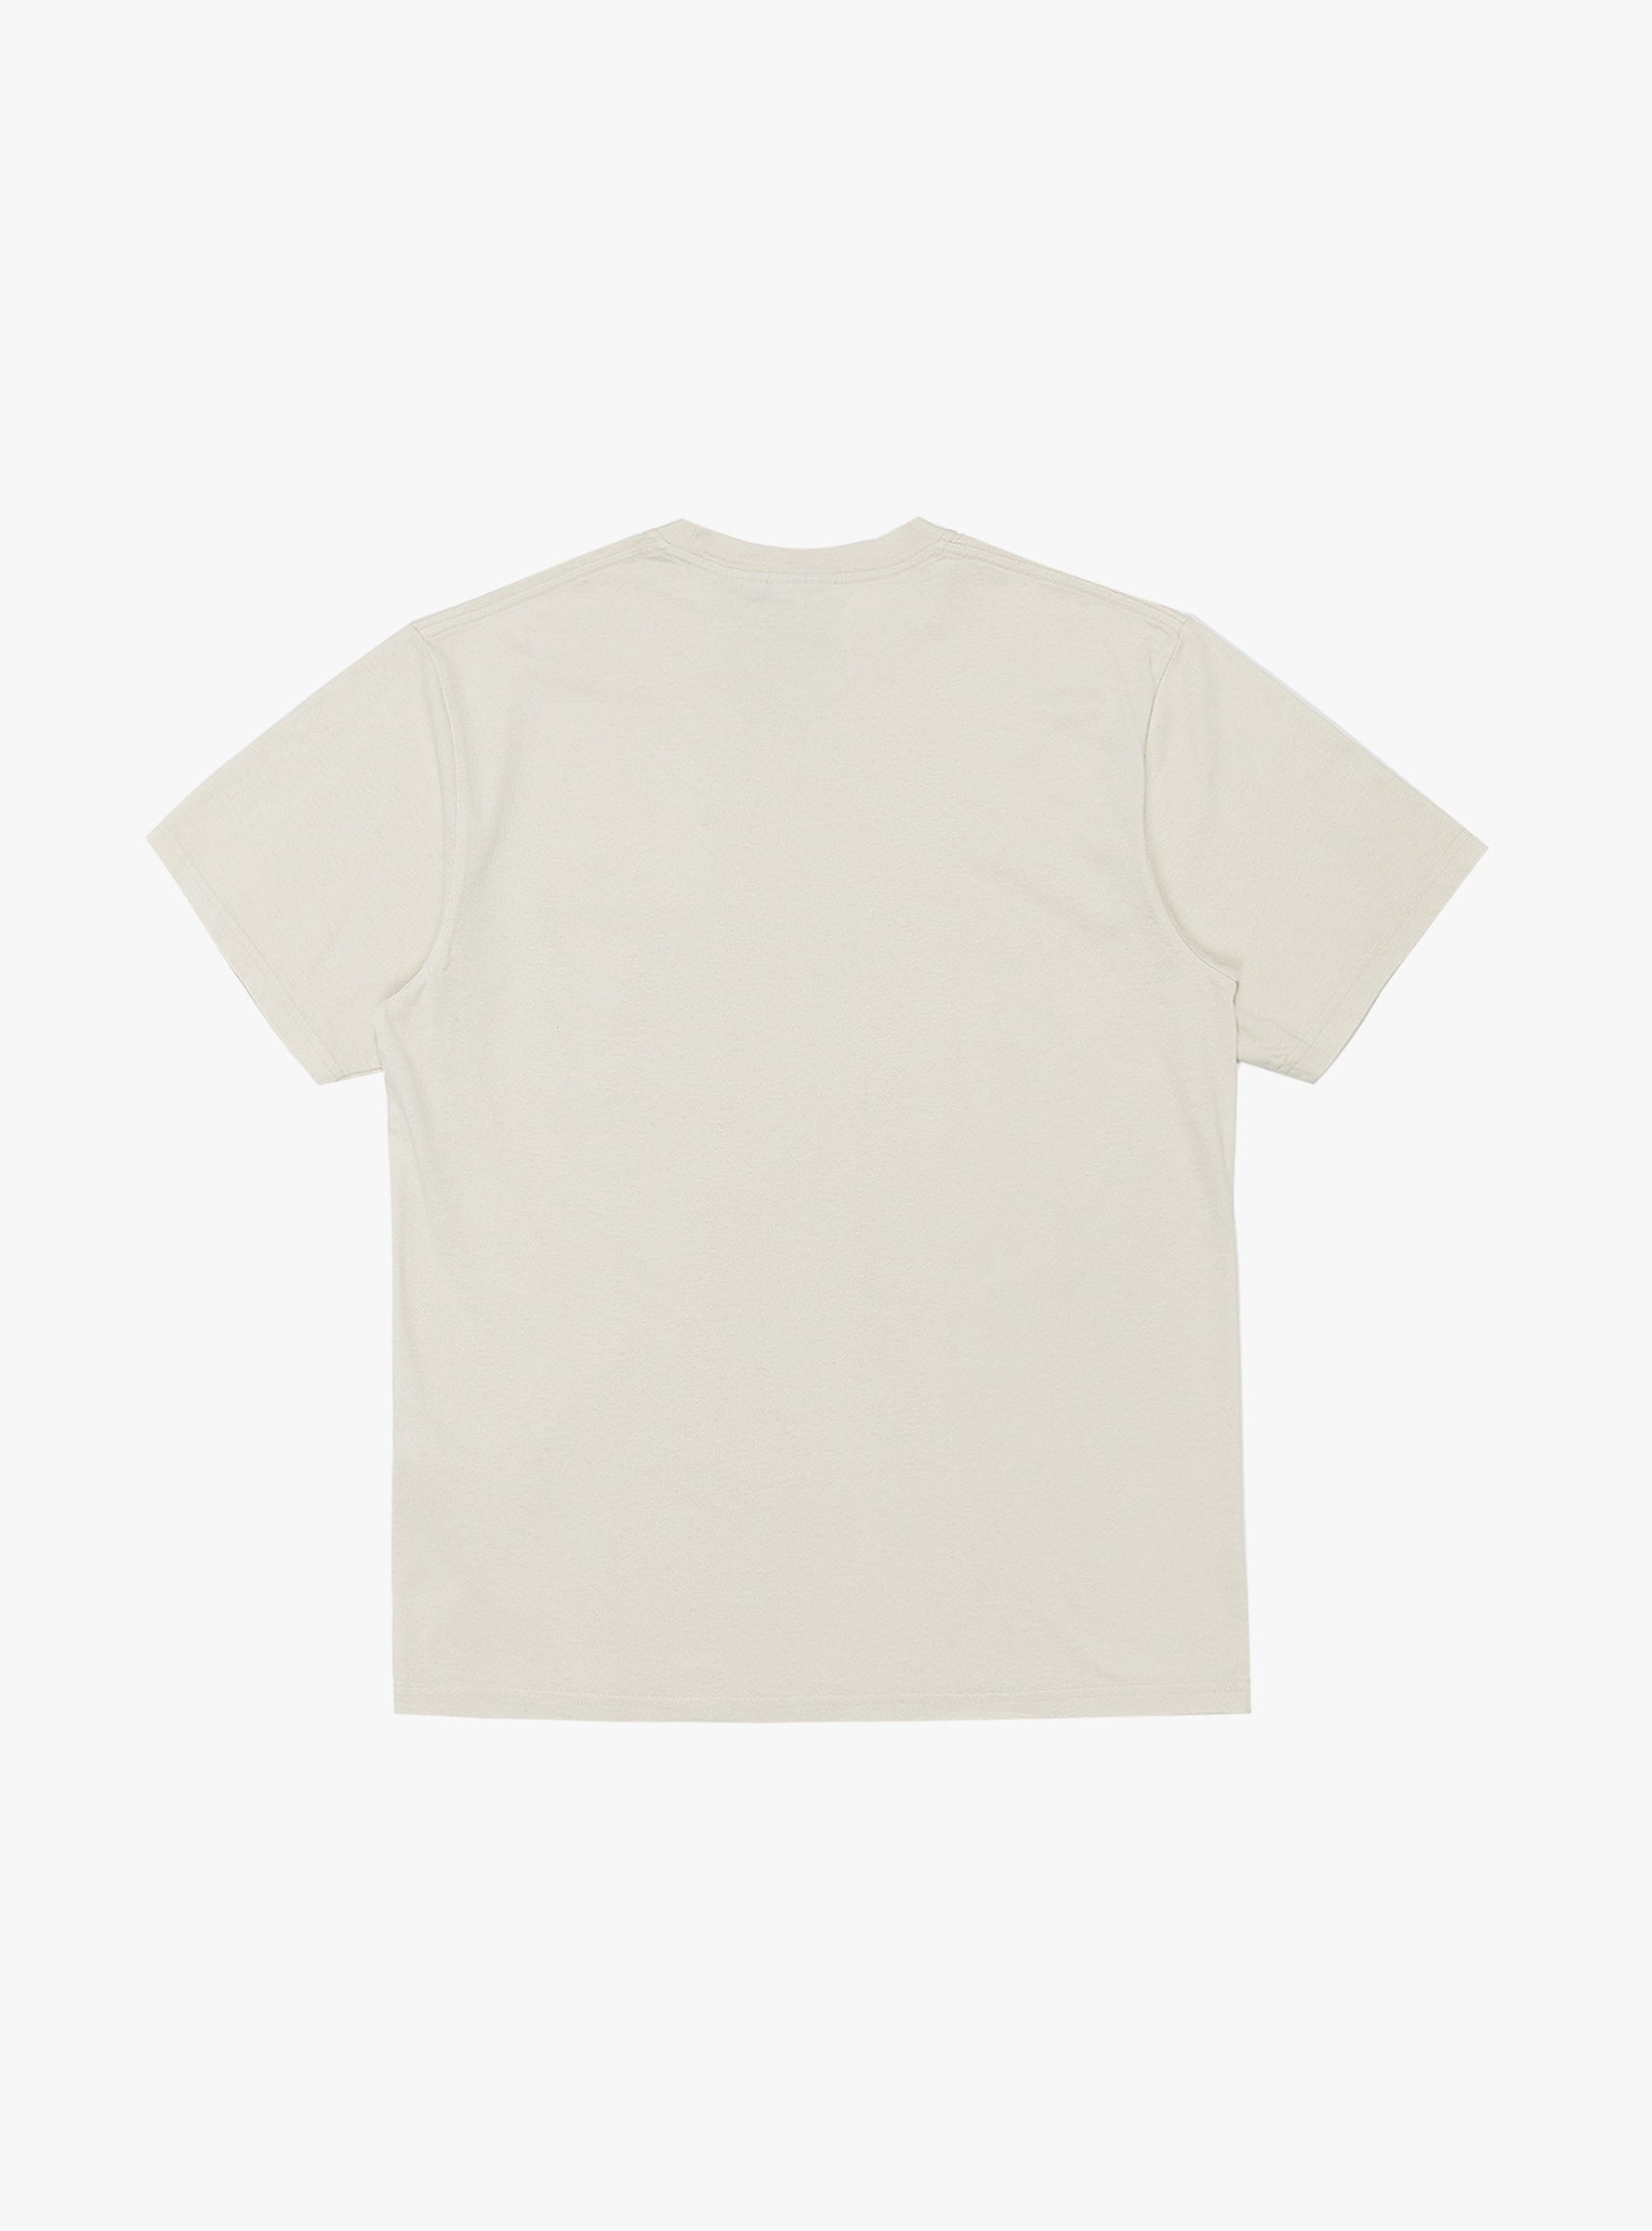 Gramicci Gramicci Pixel G T-shirt Sand Pigment - Size: Medium